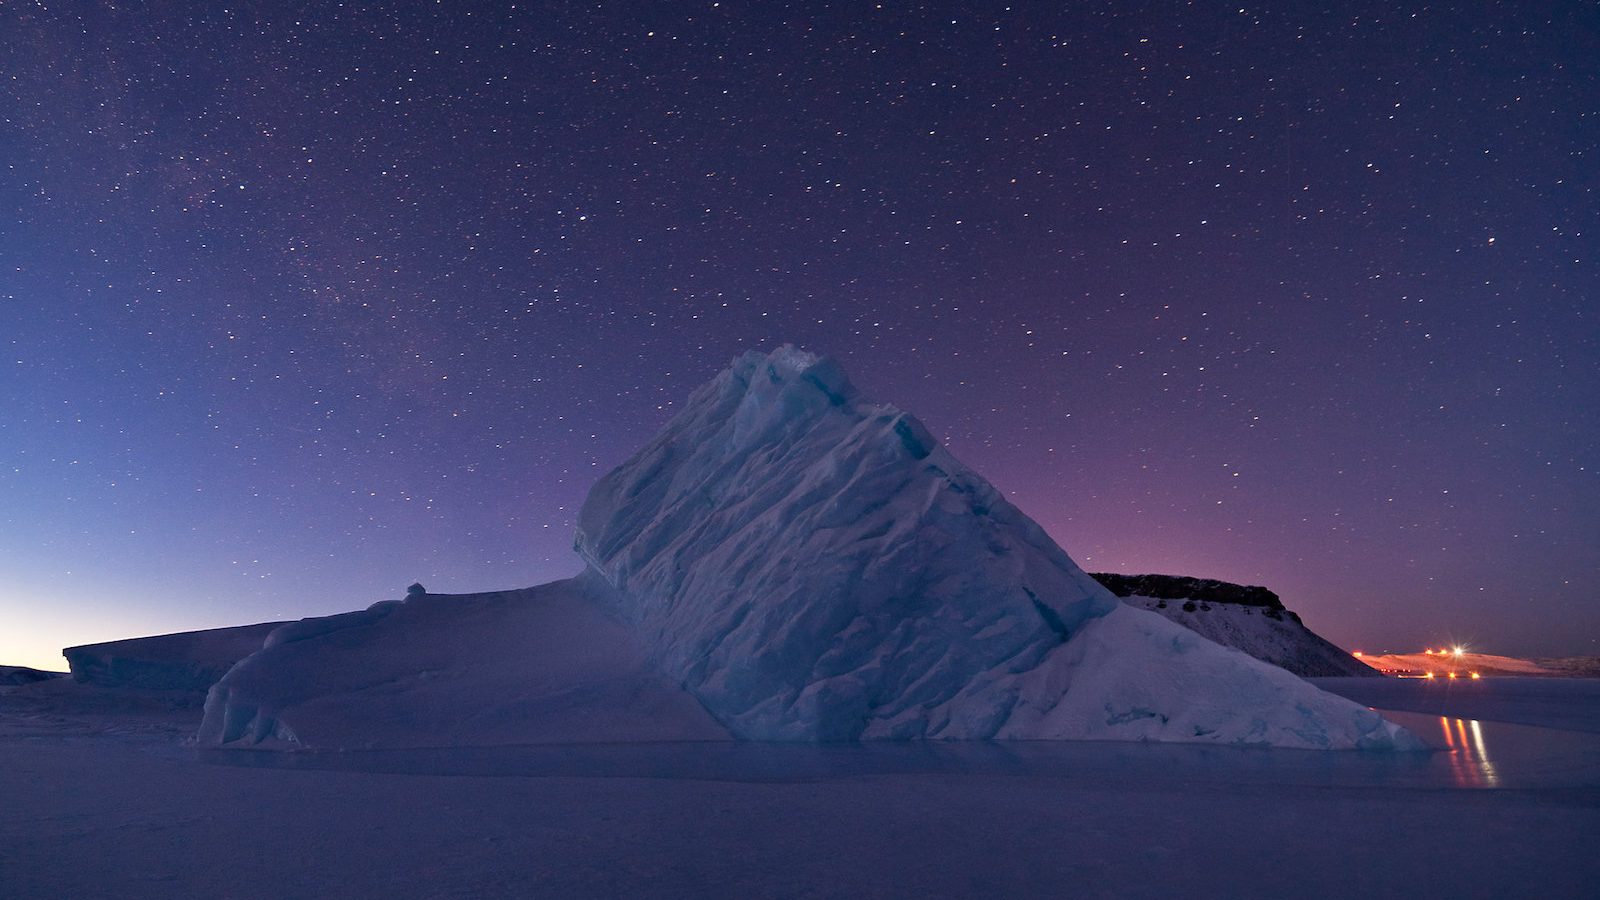 a large blue and white iceberg under dark, starry sky